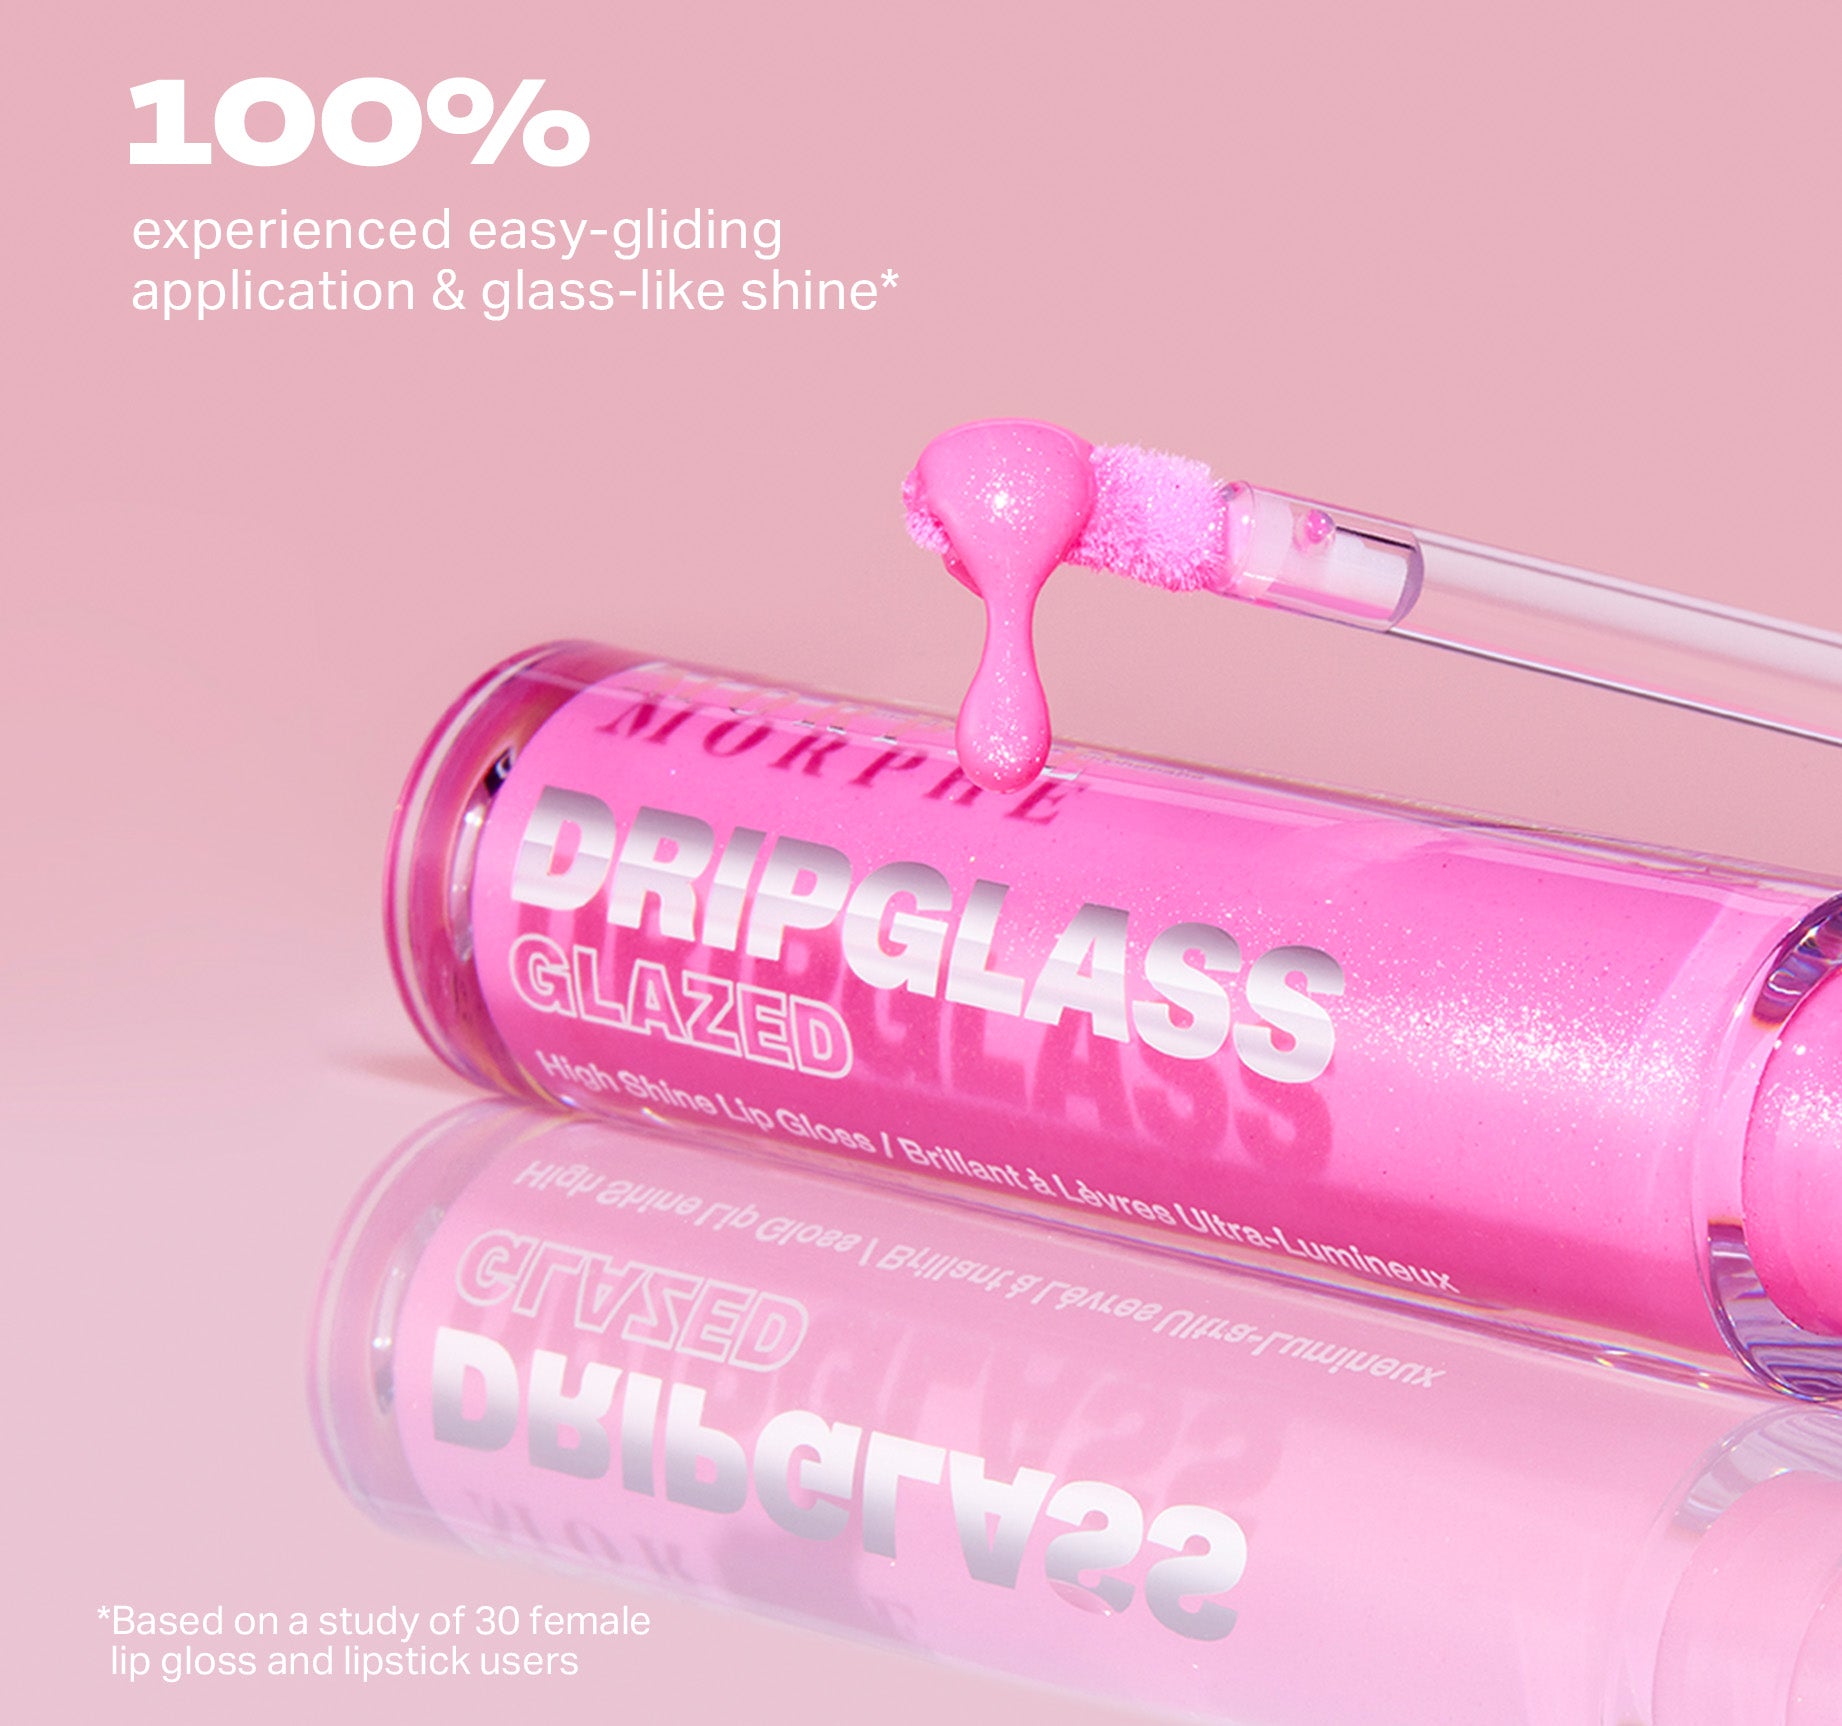 Dripglass Glazed High Shine Lip Gloss - Pink Mirror - Image 6